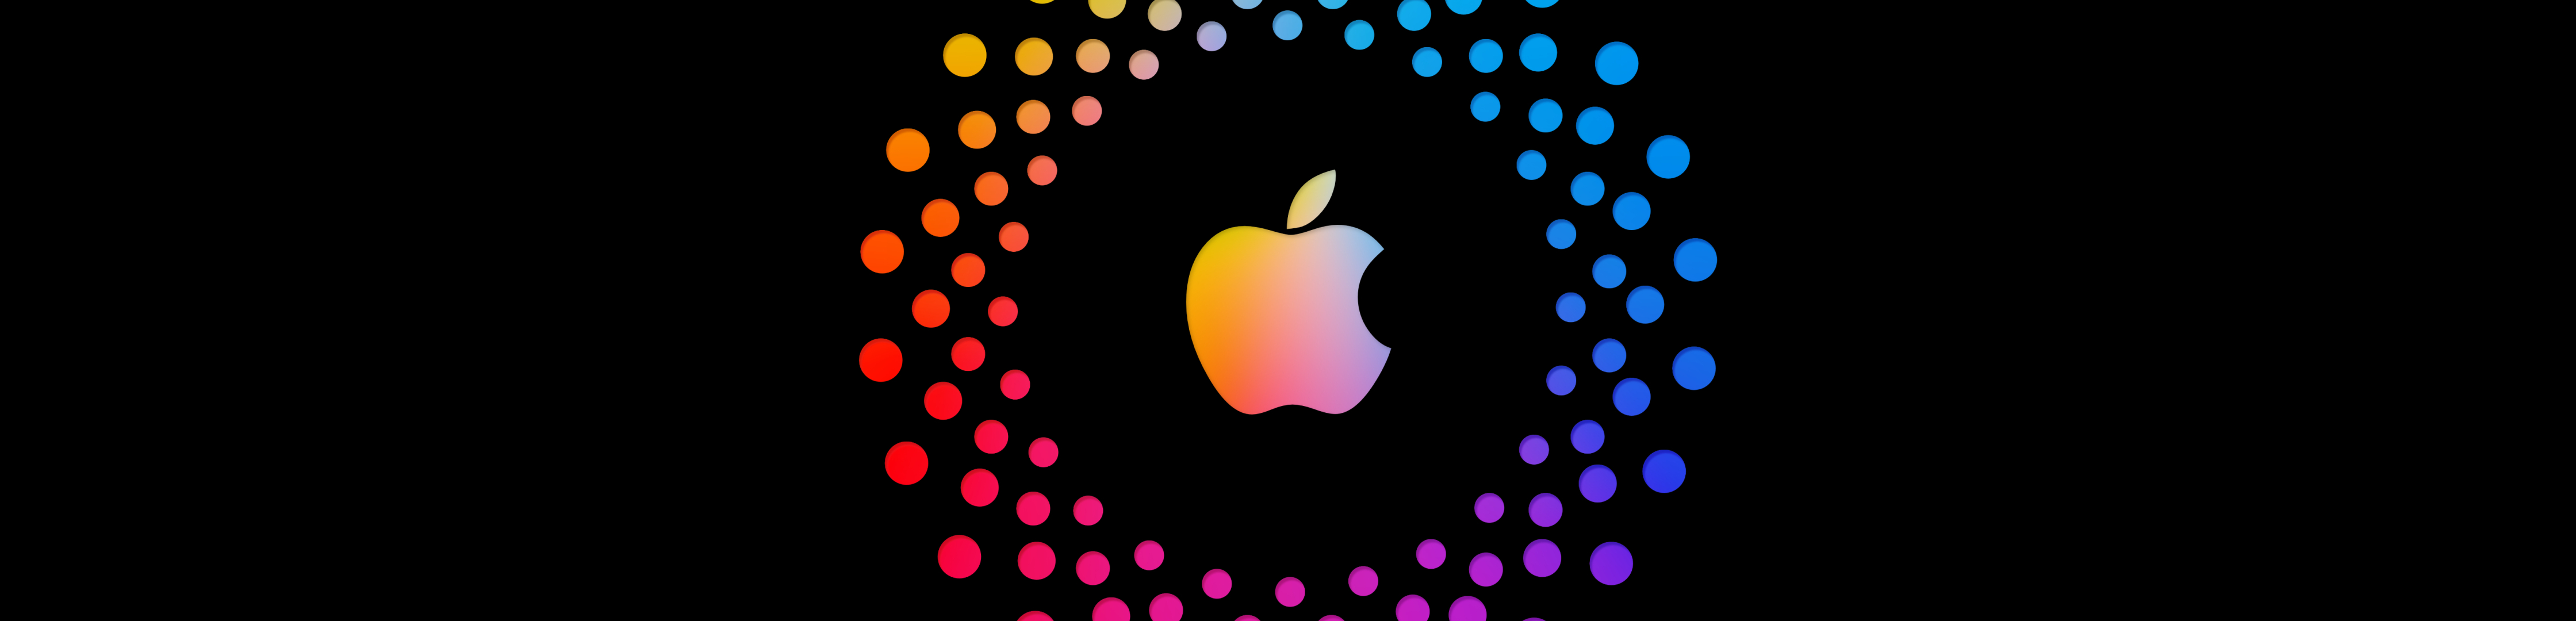 4480x1080 Apple 4k Logo Art 4480x1080 Resolution Wallpaper, HD Hi-Tech ...